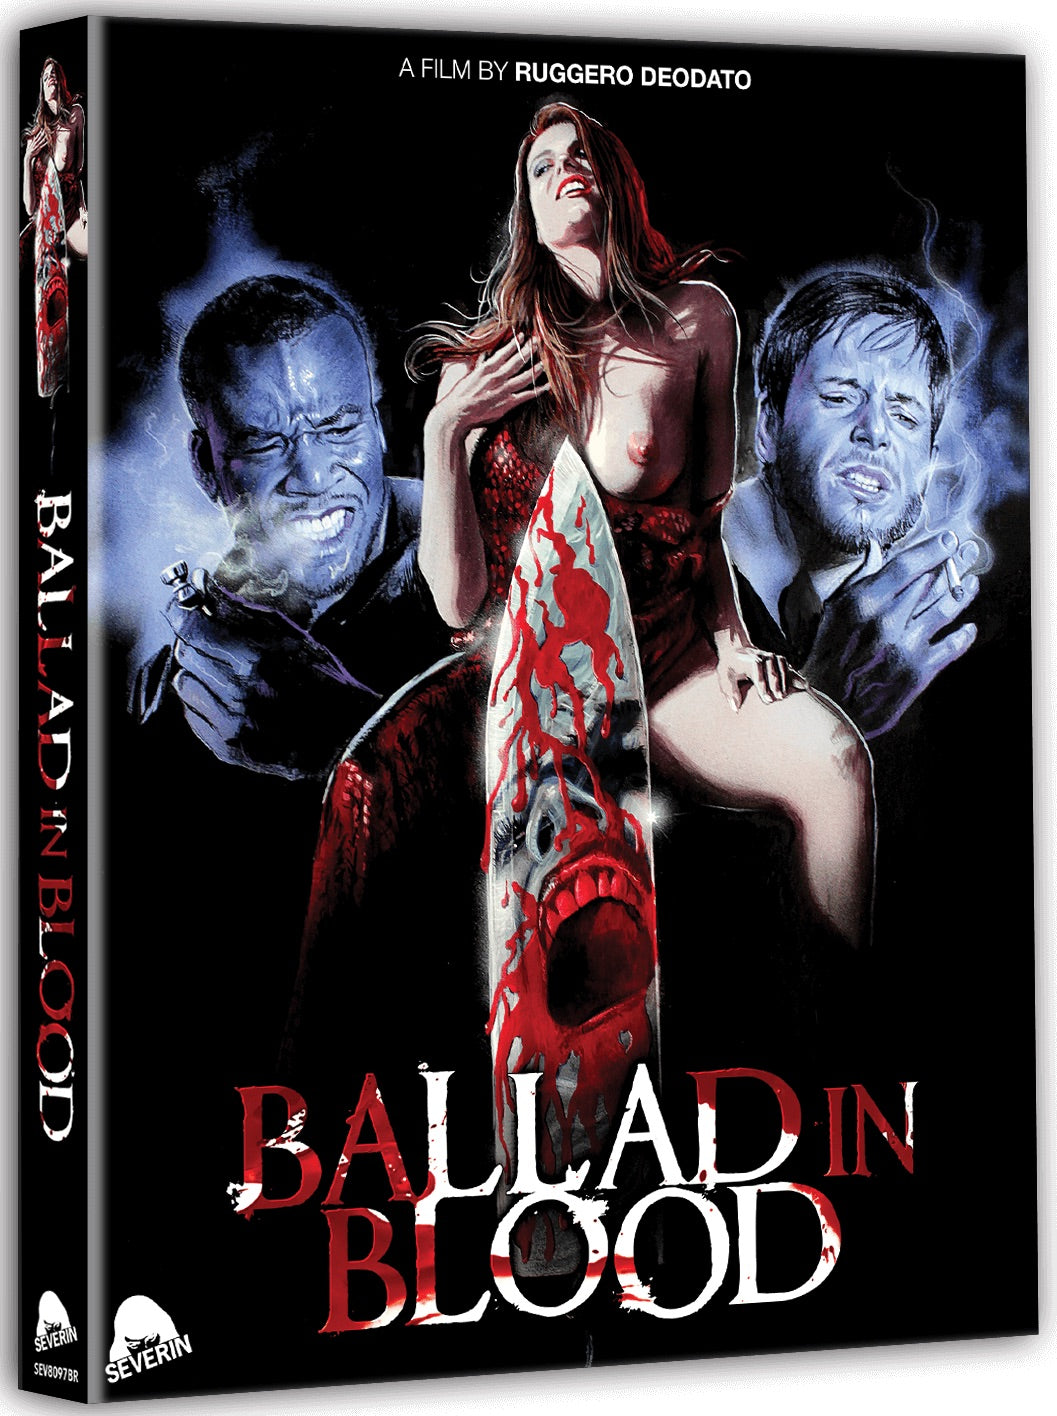 Ballad in Blood [Blu-ray w/Slipcover]